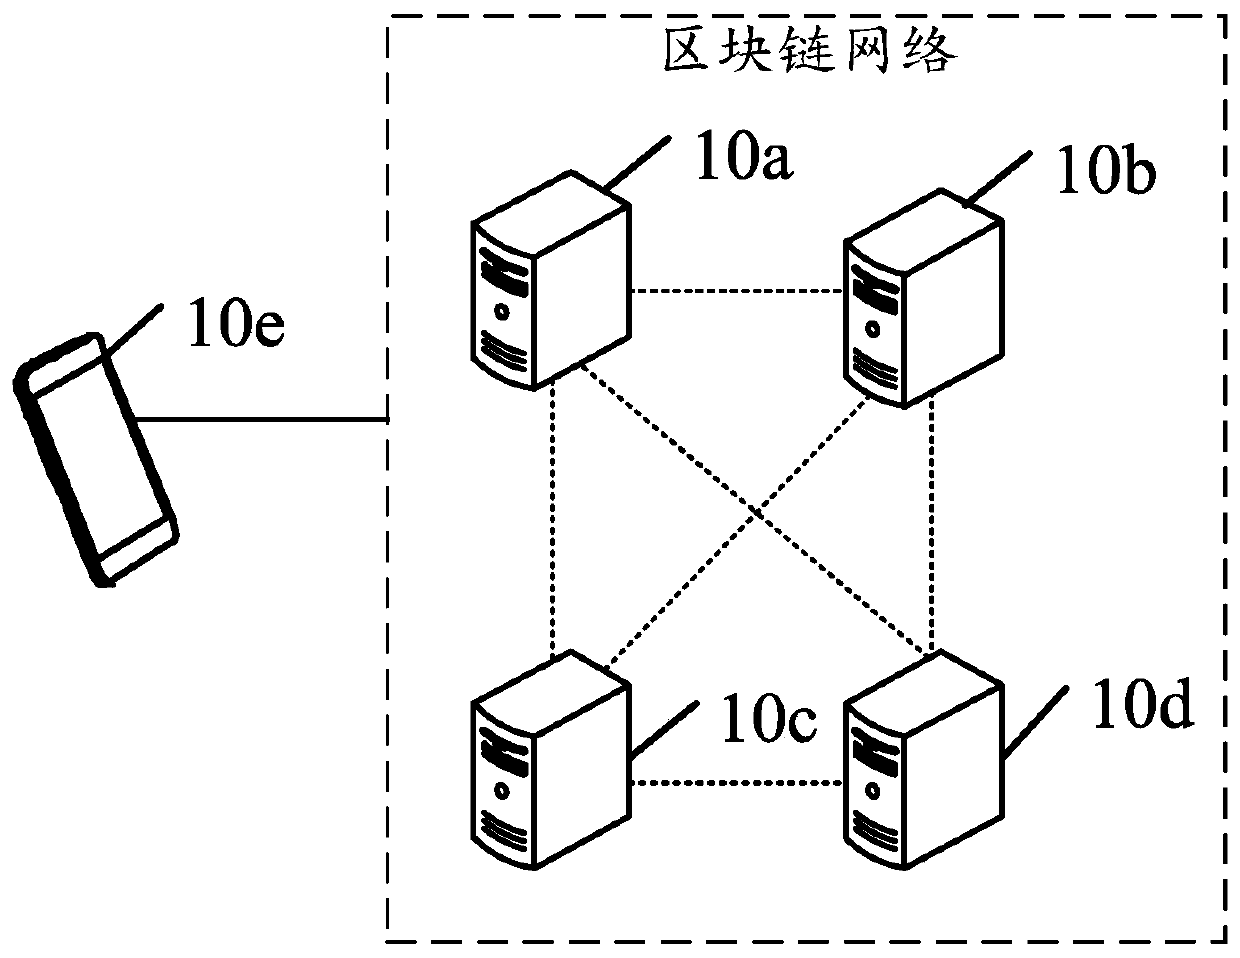 Block chain consensus node verification method and device, equipment and storage medium